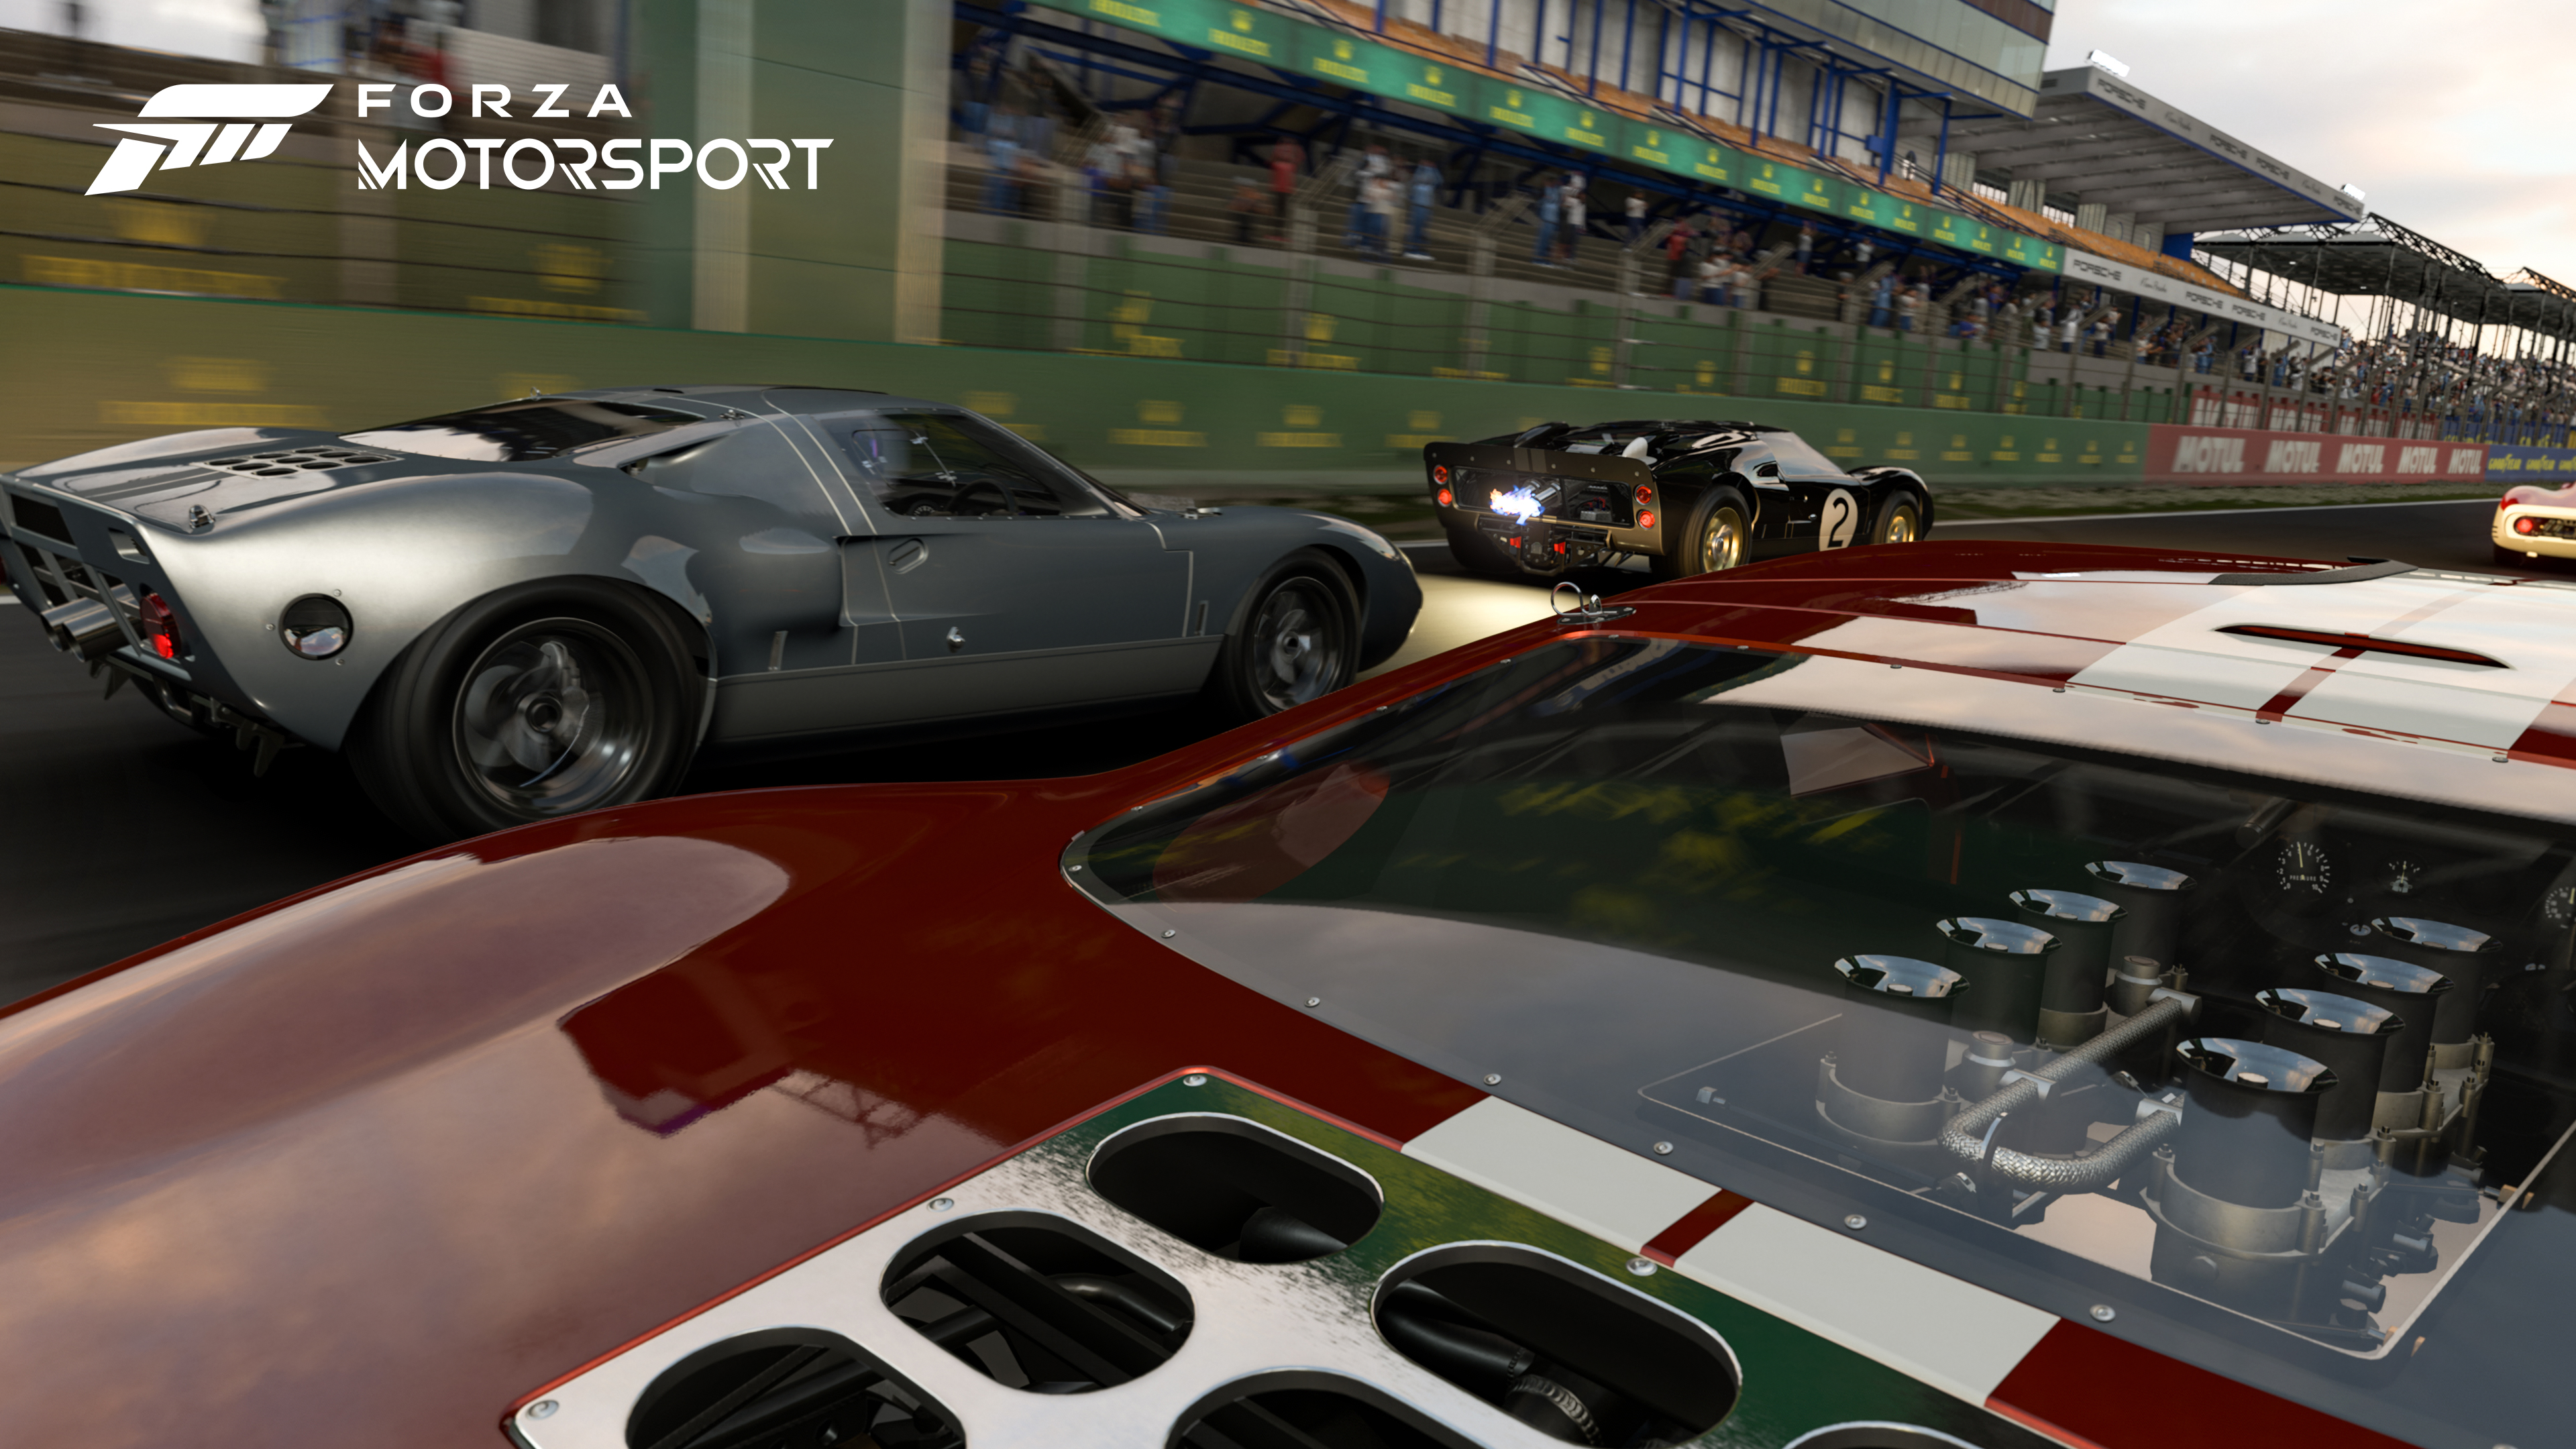 Best retro sports cars in Forza Horizon 5, from Jaguar to Porsche - Dexerto